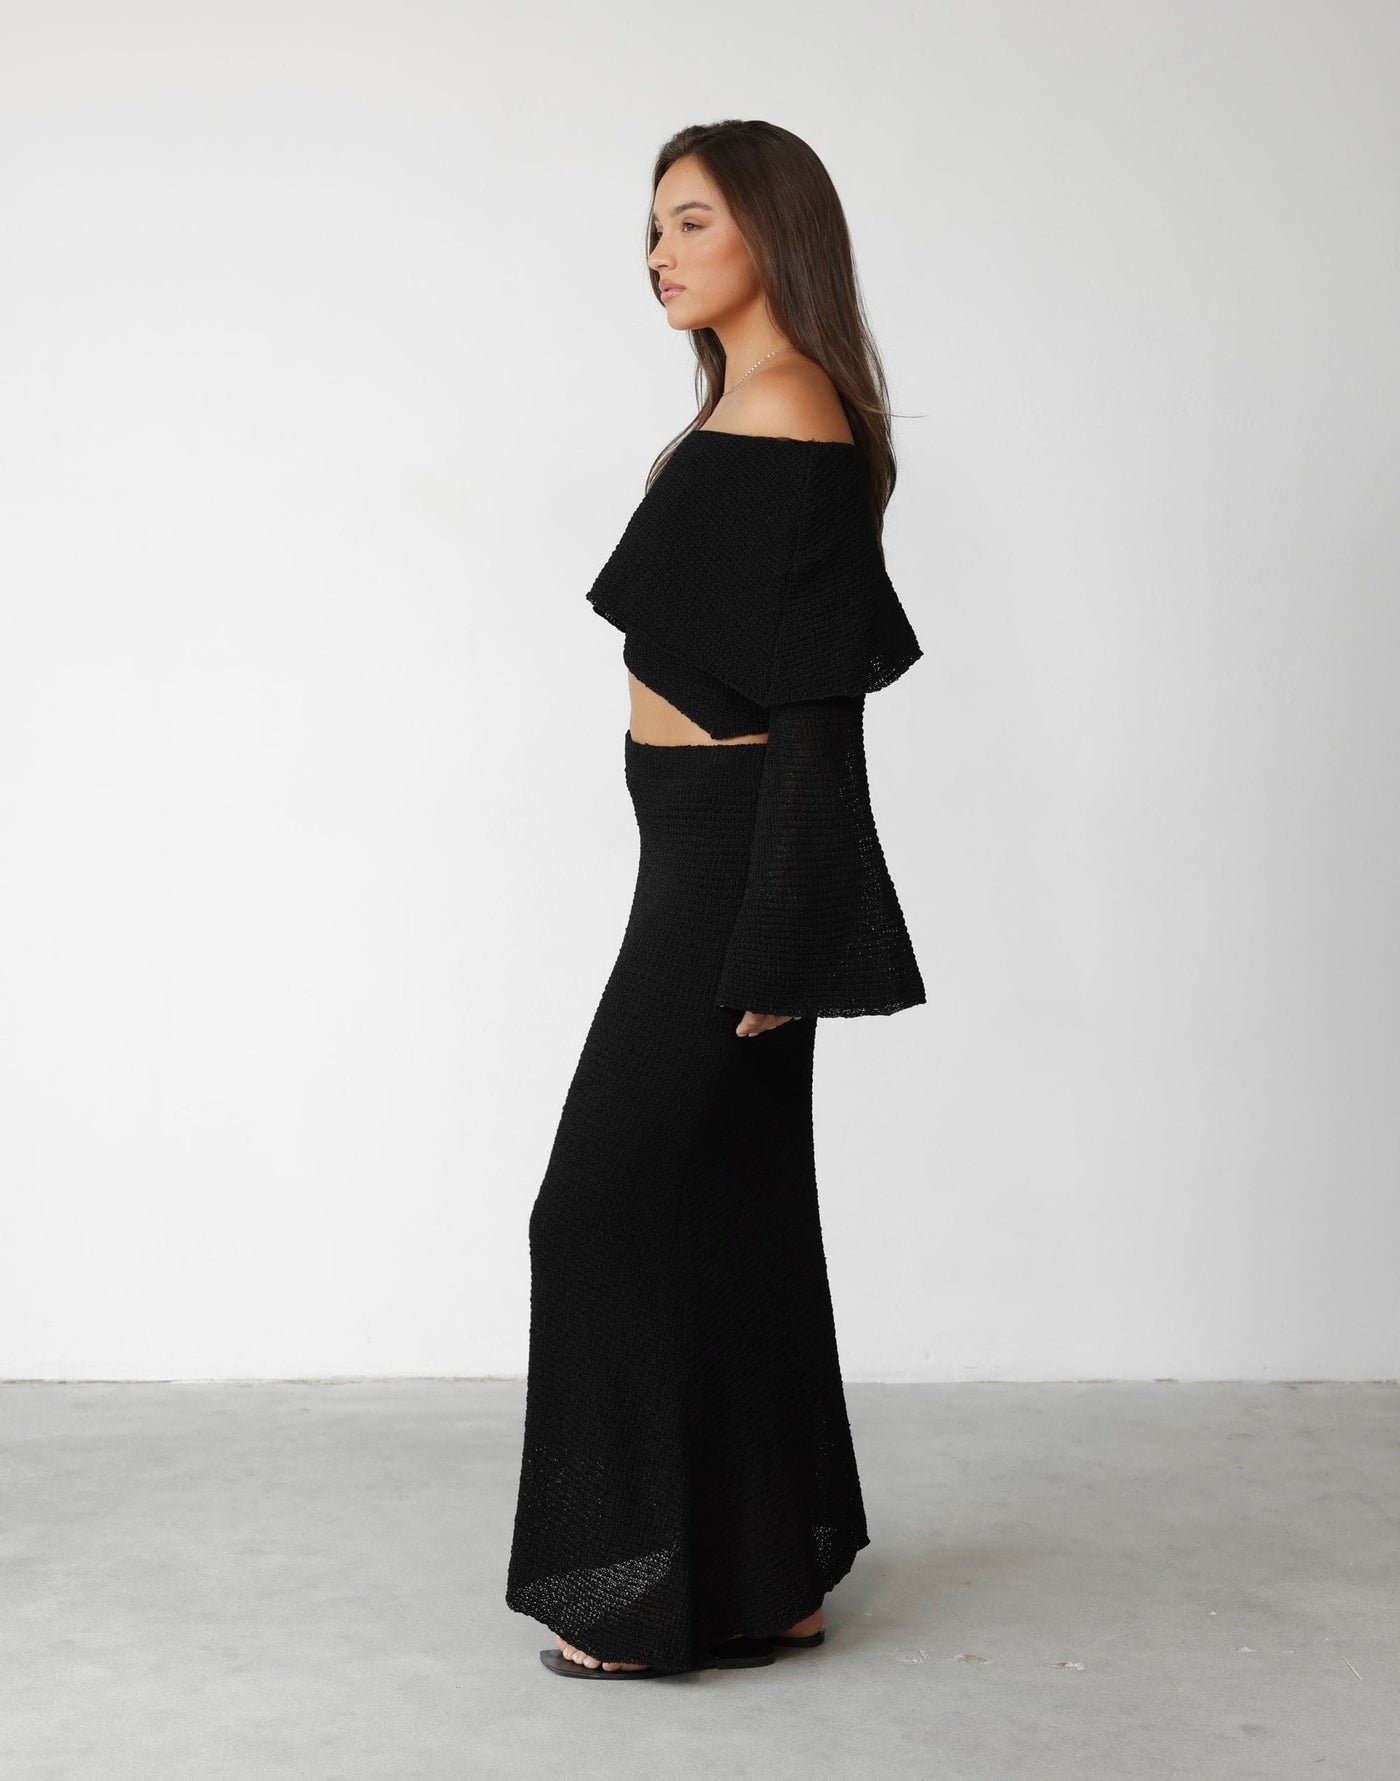 Sundown Maxi Skirt (Black) | Charcoal Clothing Exclusive - Stretch Sheer Full Skirt Maxi - Women's Top - Charcoal Clothing